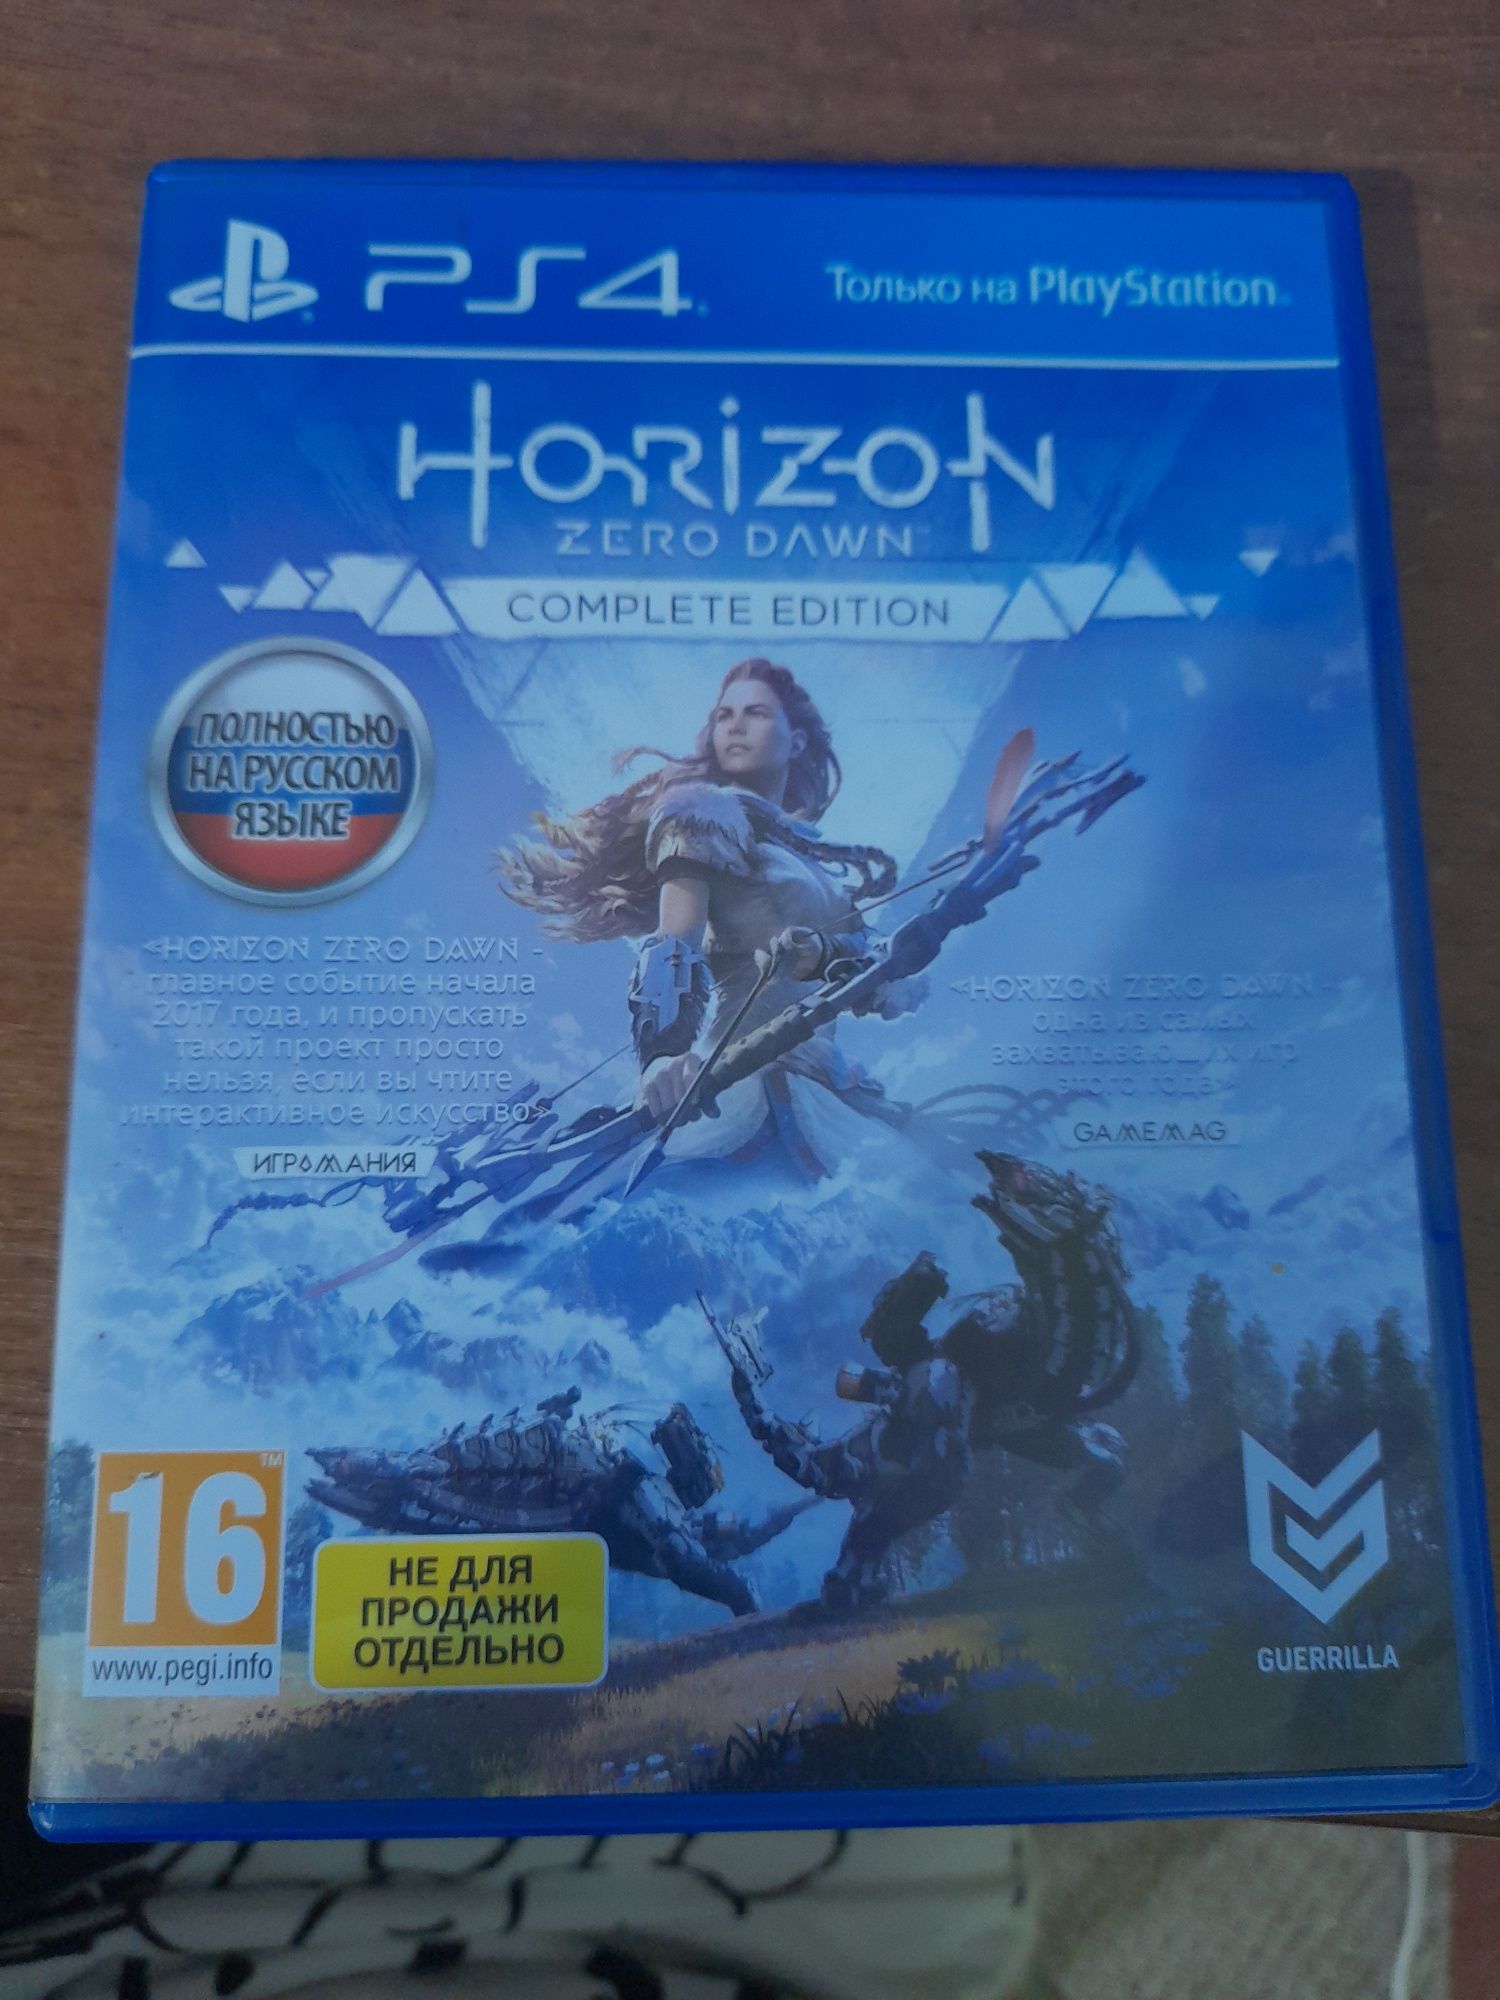 Horizen Zero Dawn Complete Edition